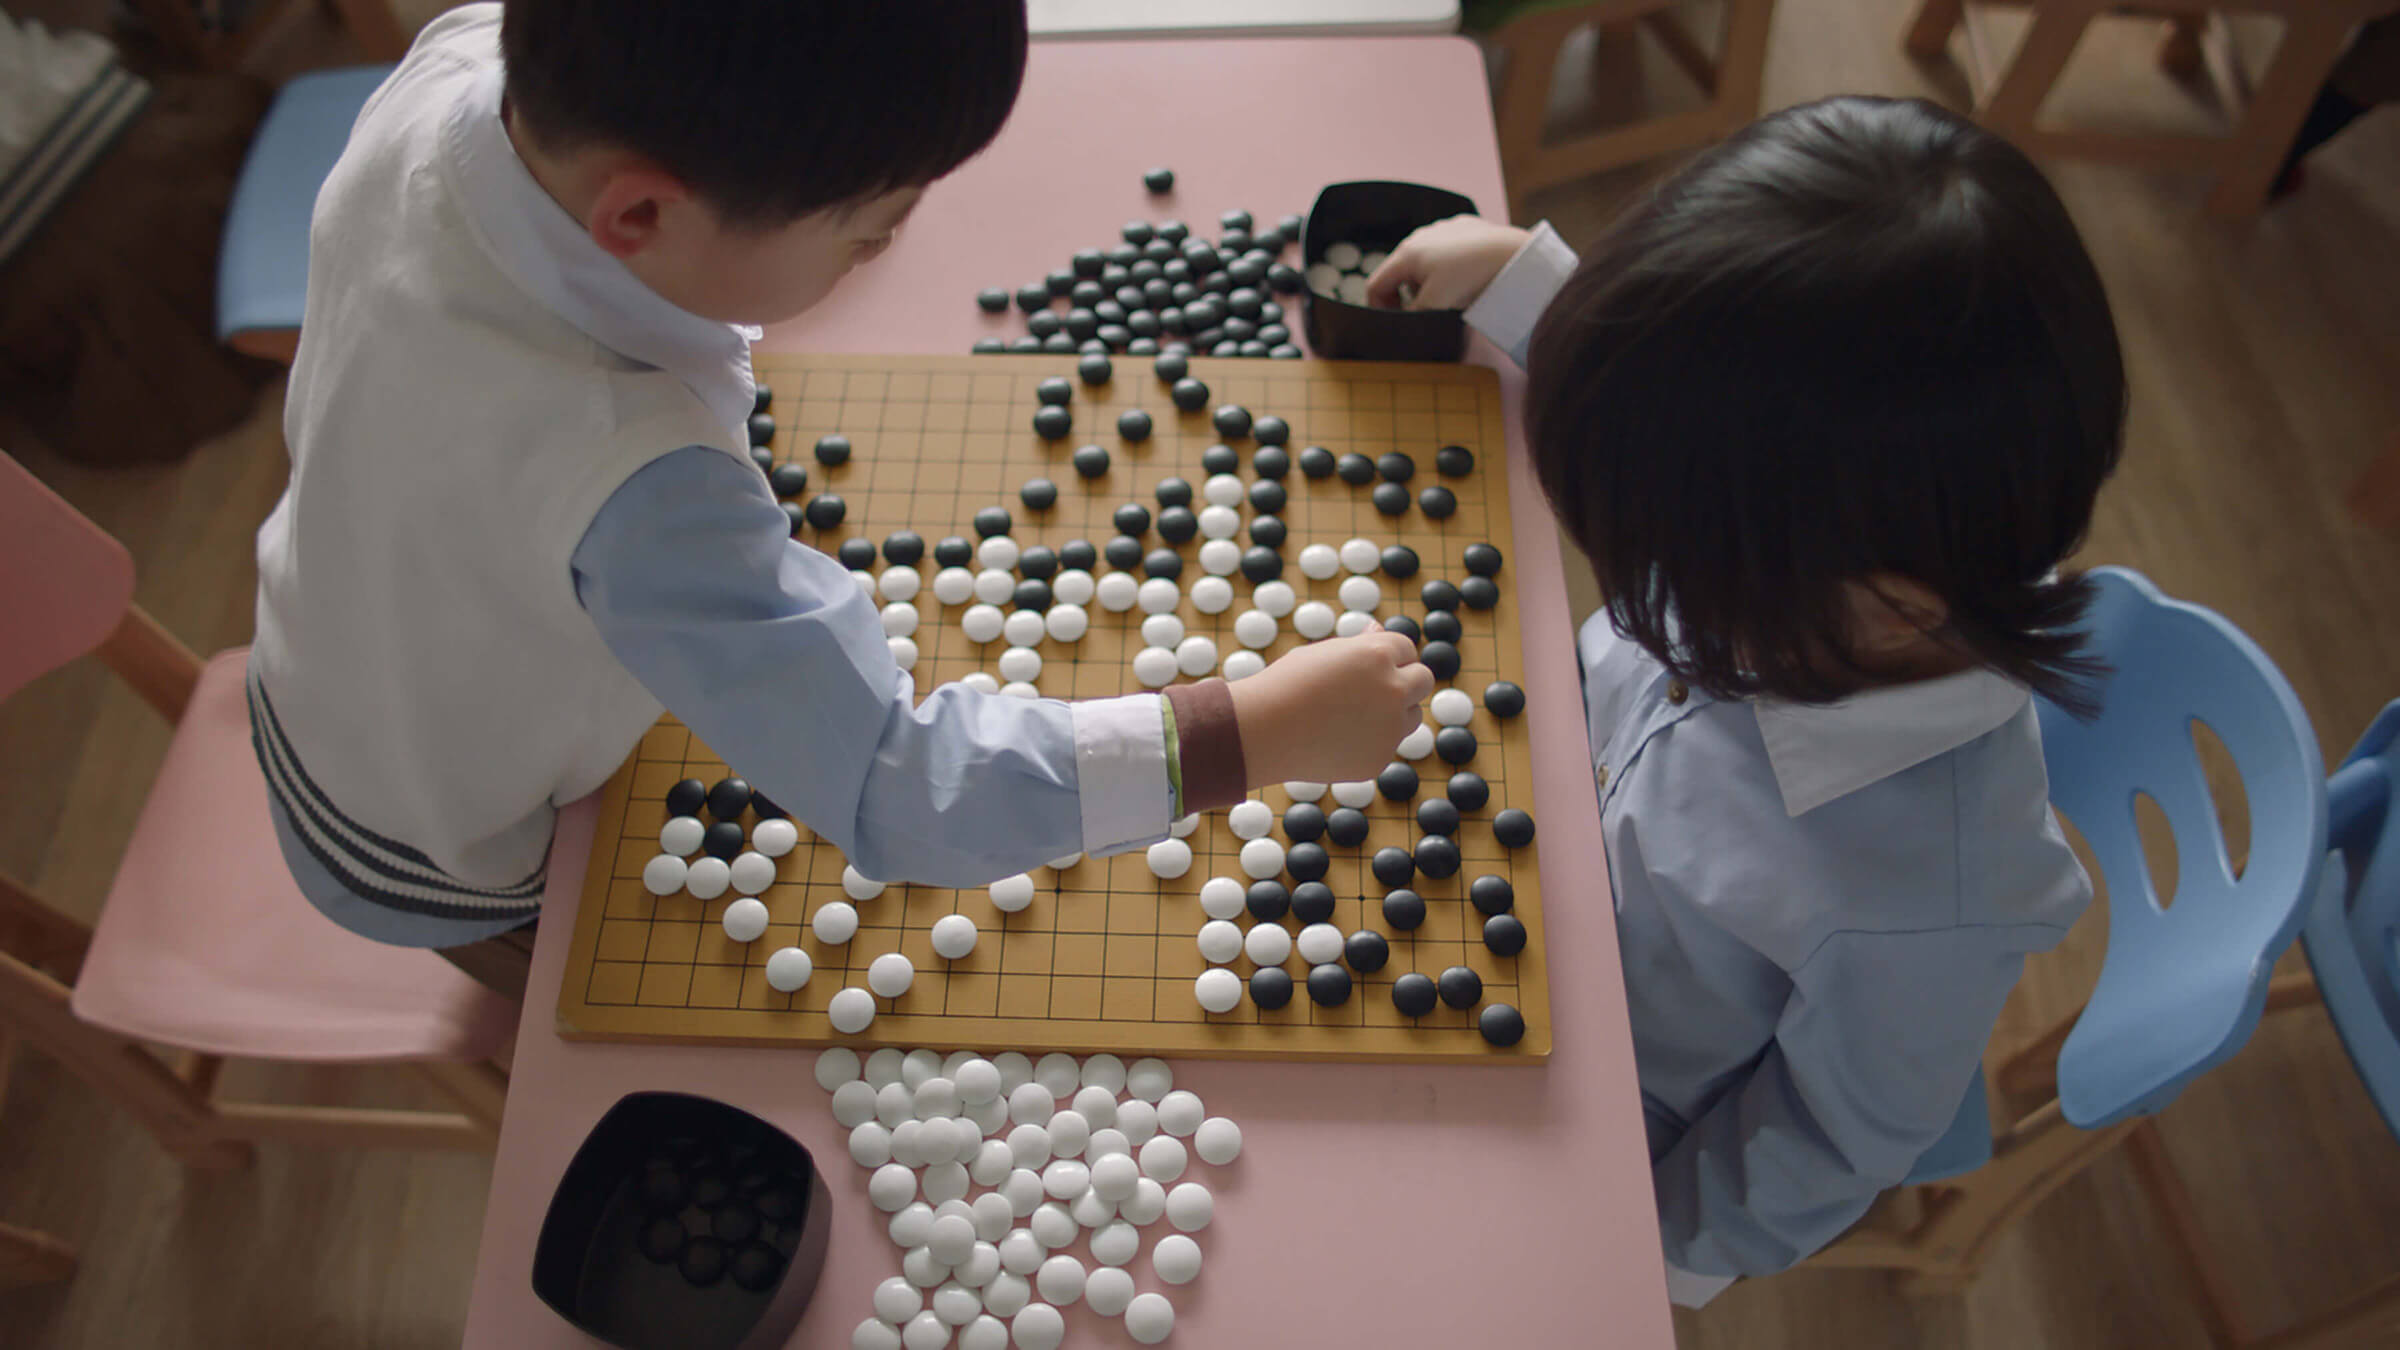 AlphaGo Zero: Google DeepMind supercomputer learns 3,000 years of human  knowledge in 40 days